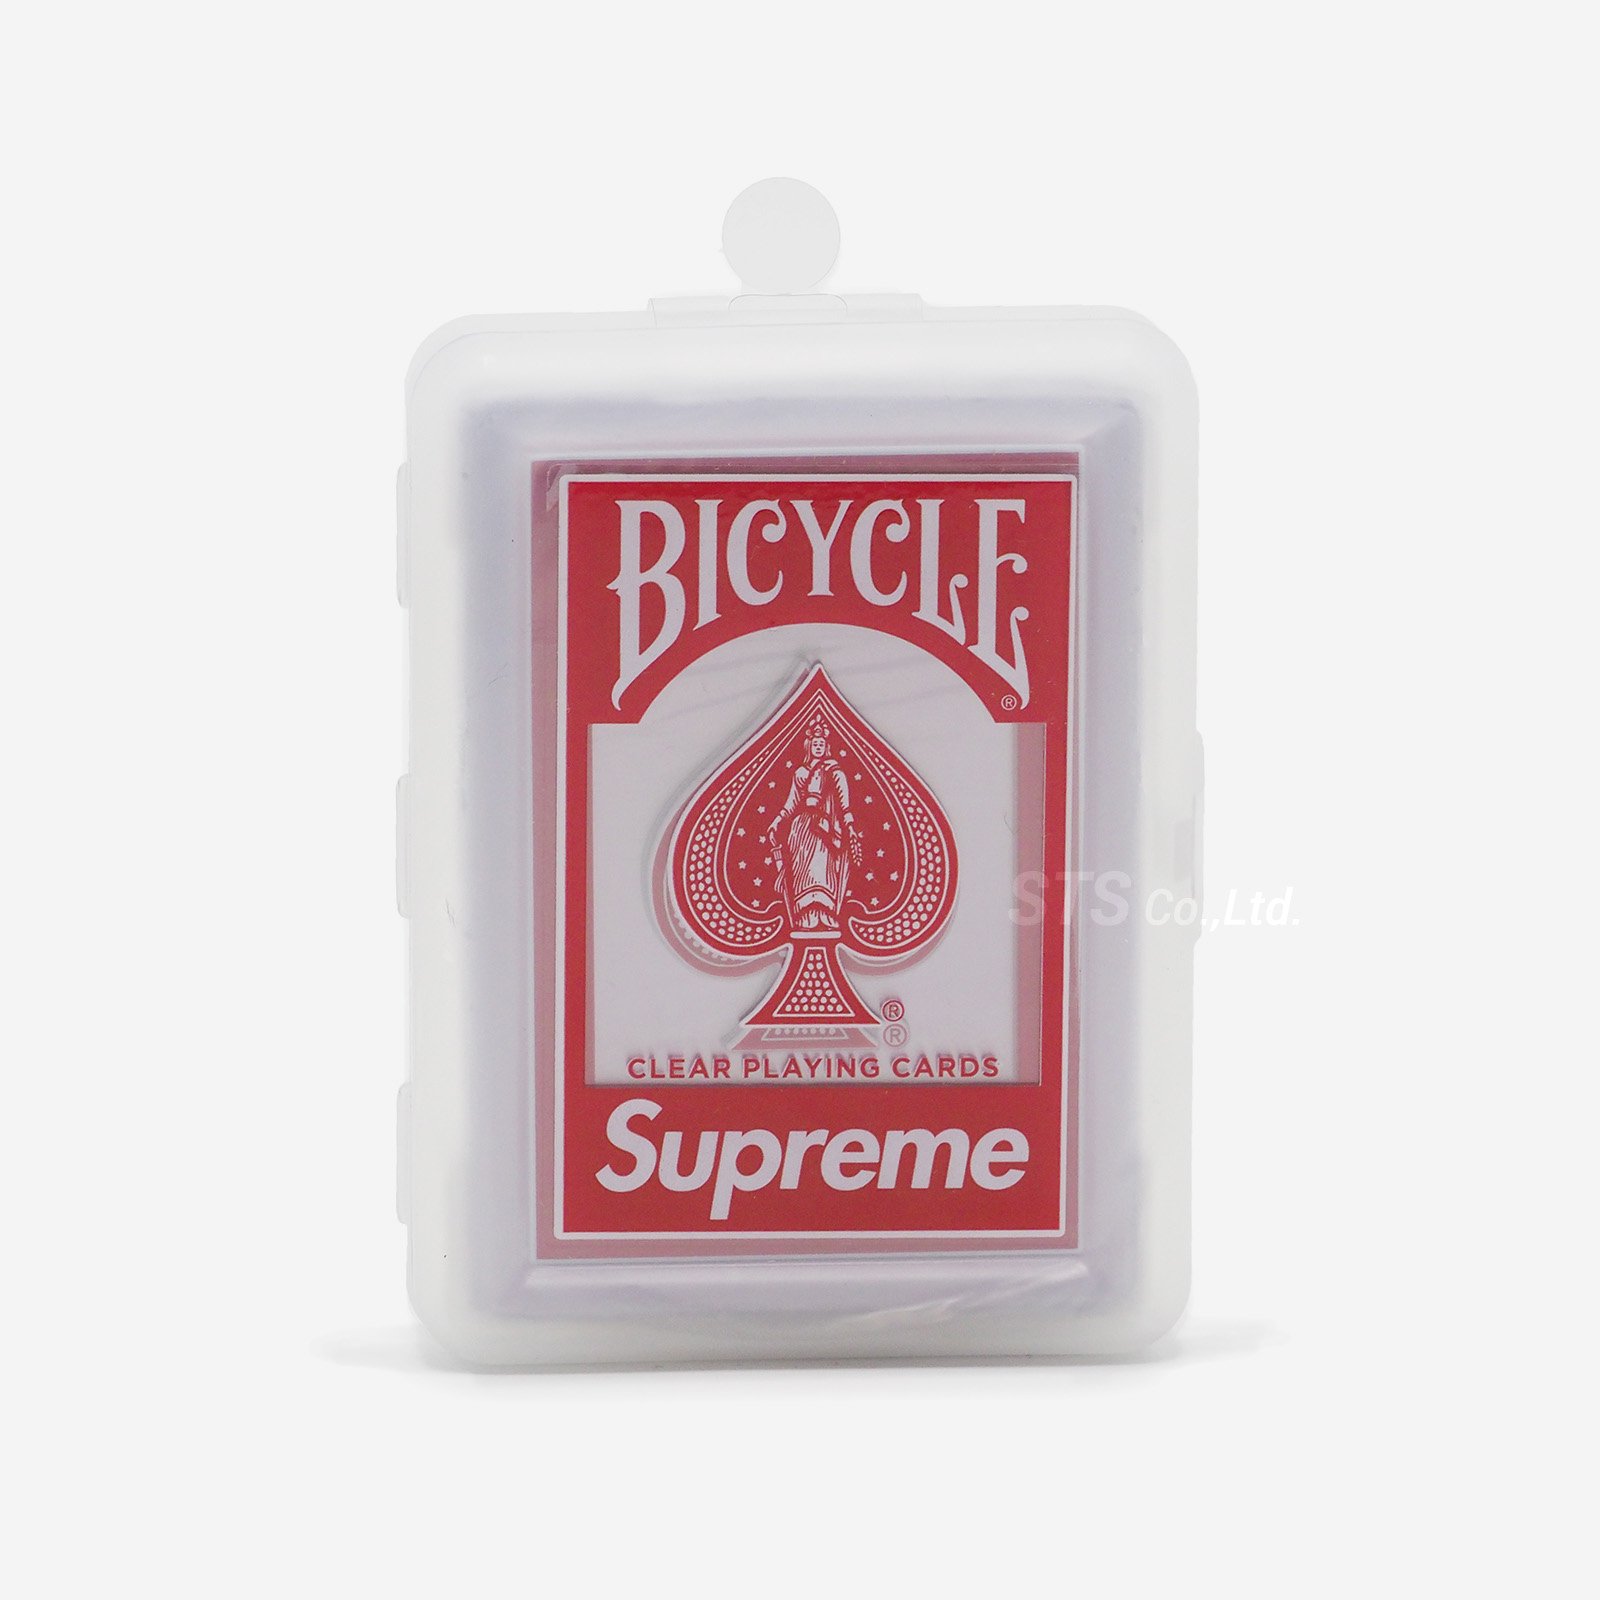 Supreme/Bicycle Clear Playing Cards - UG.SHAFT